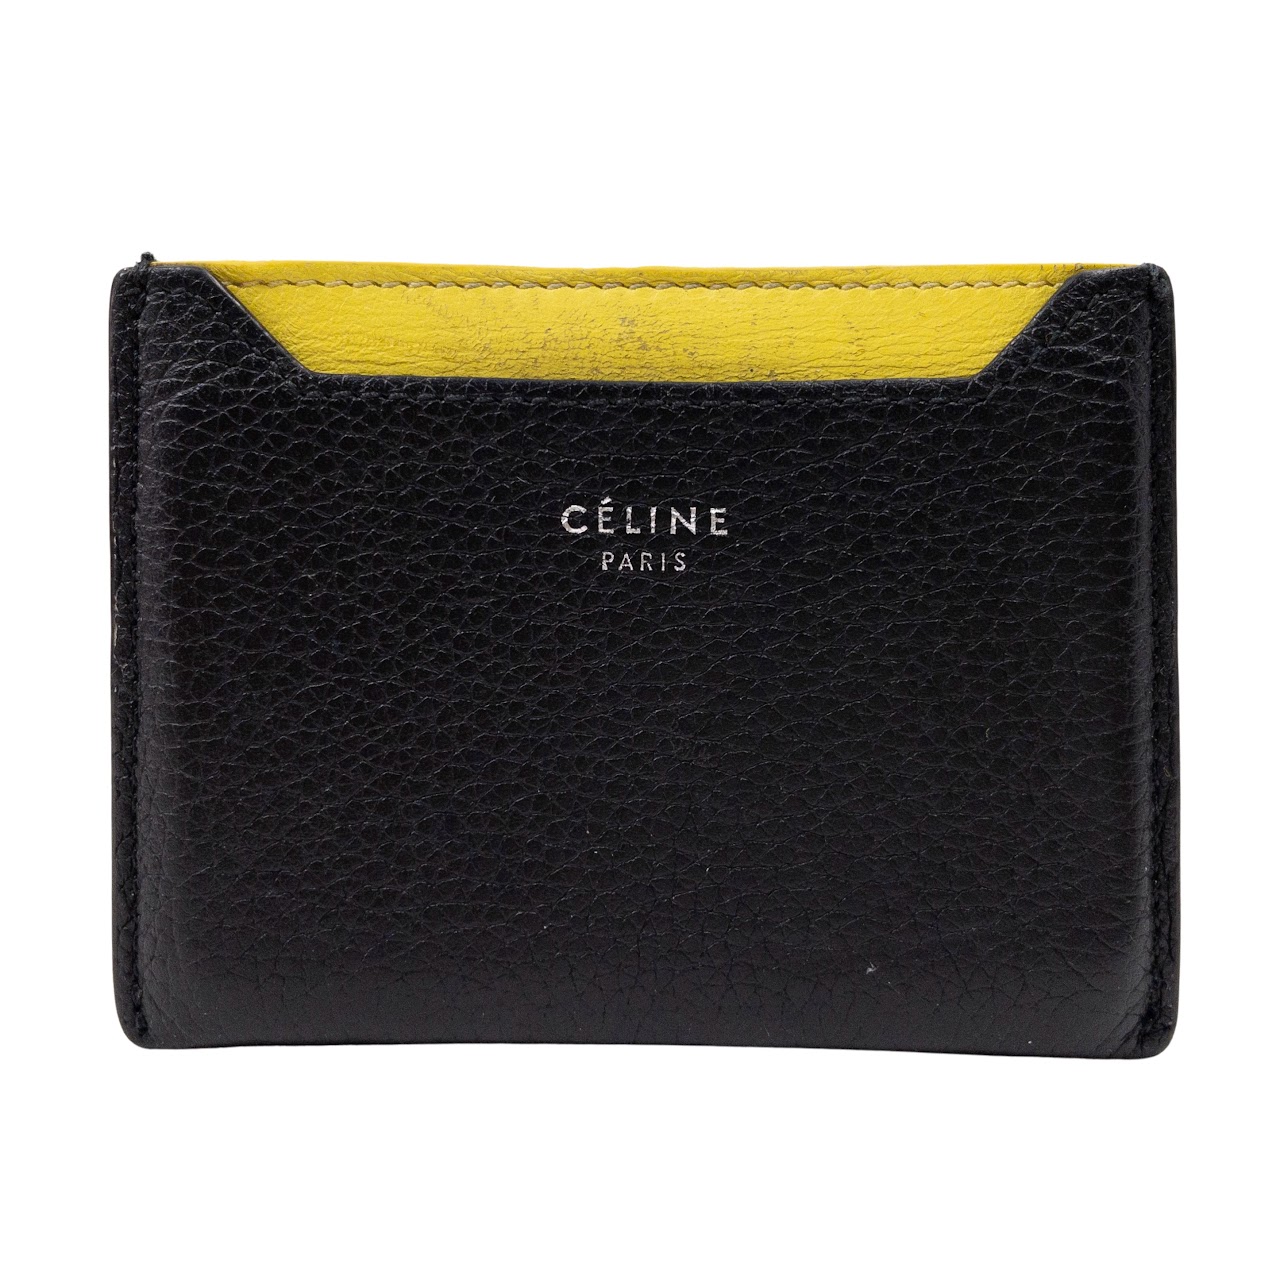 Céline Black & Yellow Two-Pocket Card Wallet